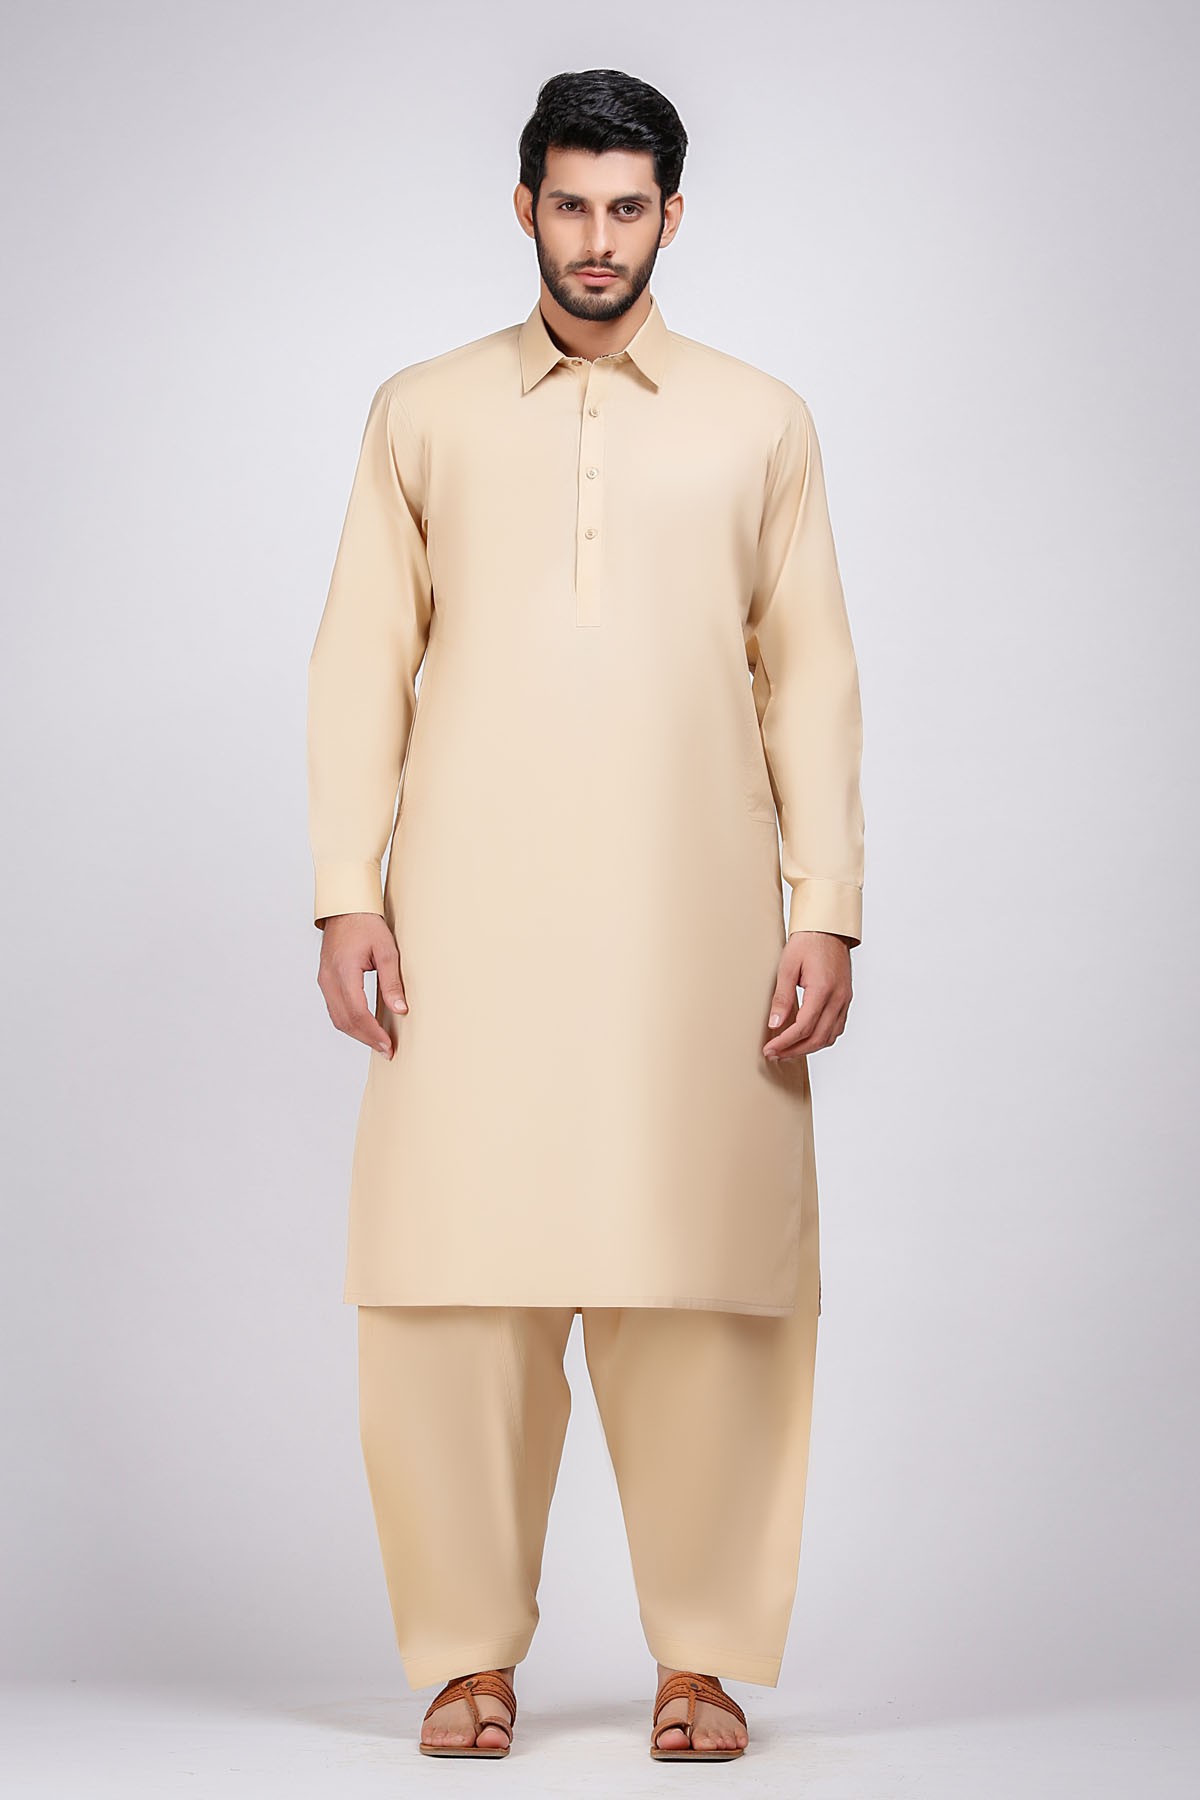 Alkaram Eid Men's Collection